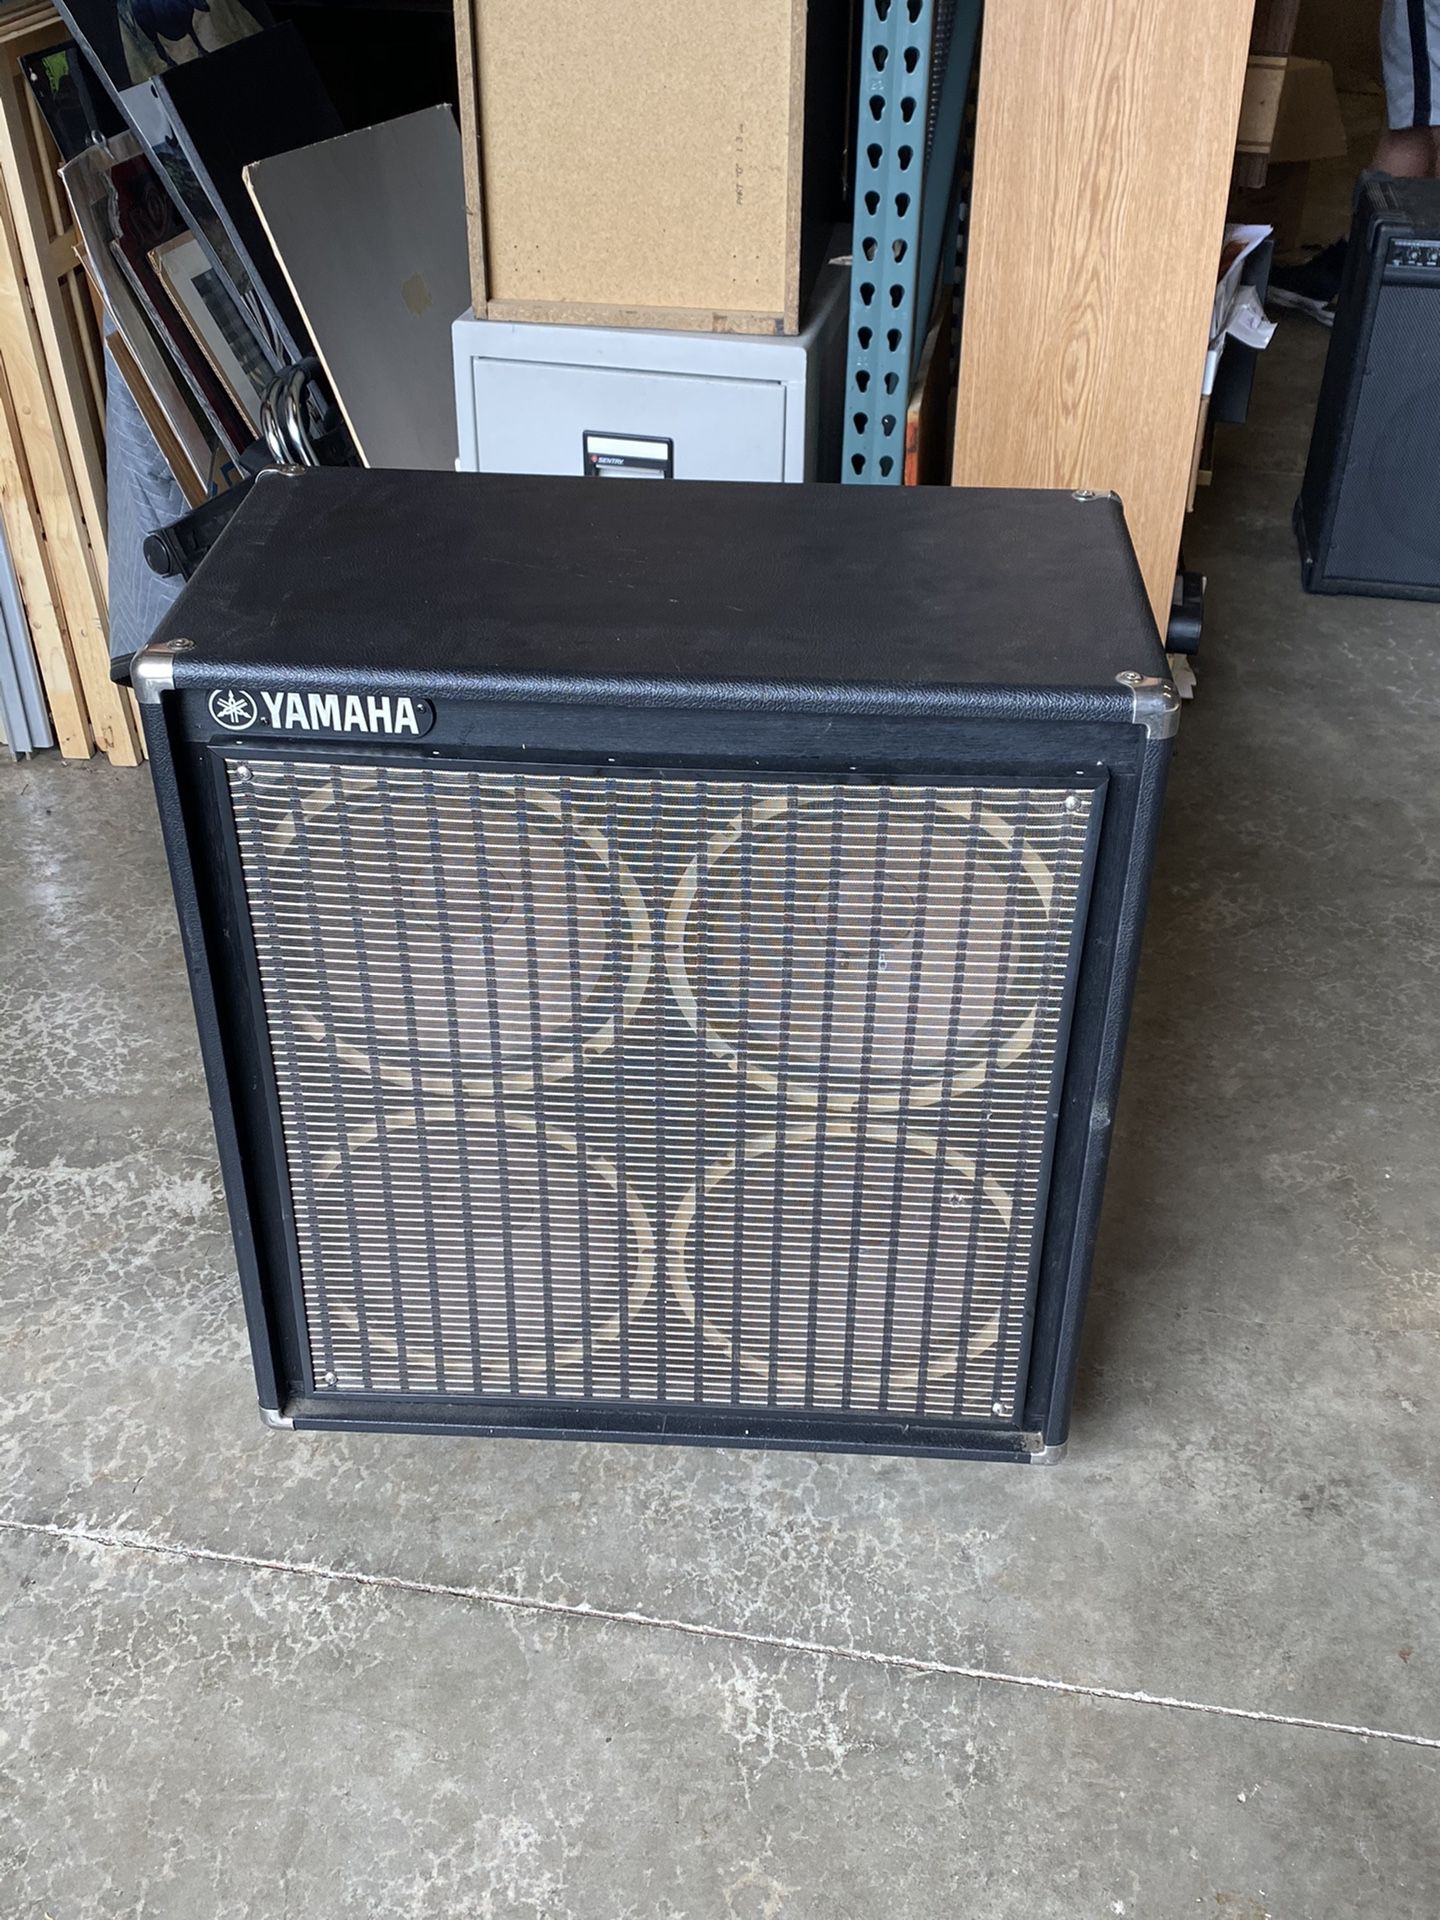 Yamaha S412 Guitar speaker